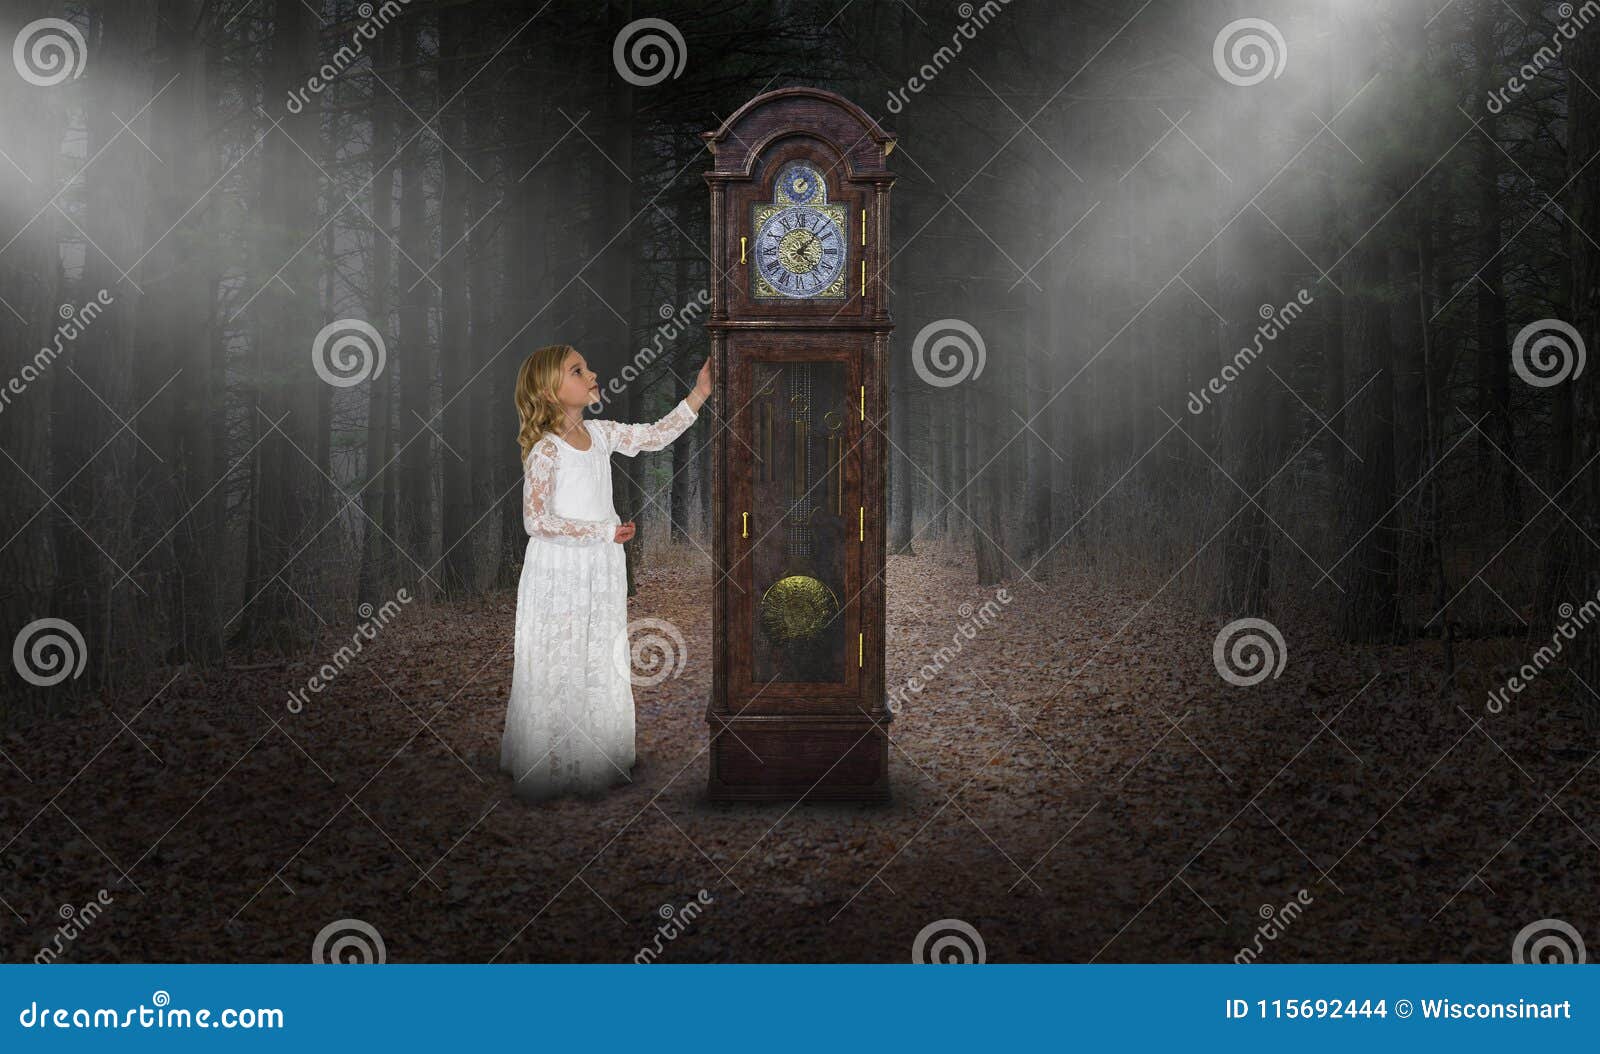 surreal time, grandfather clock, girl